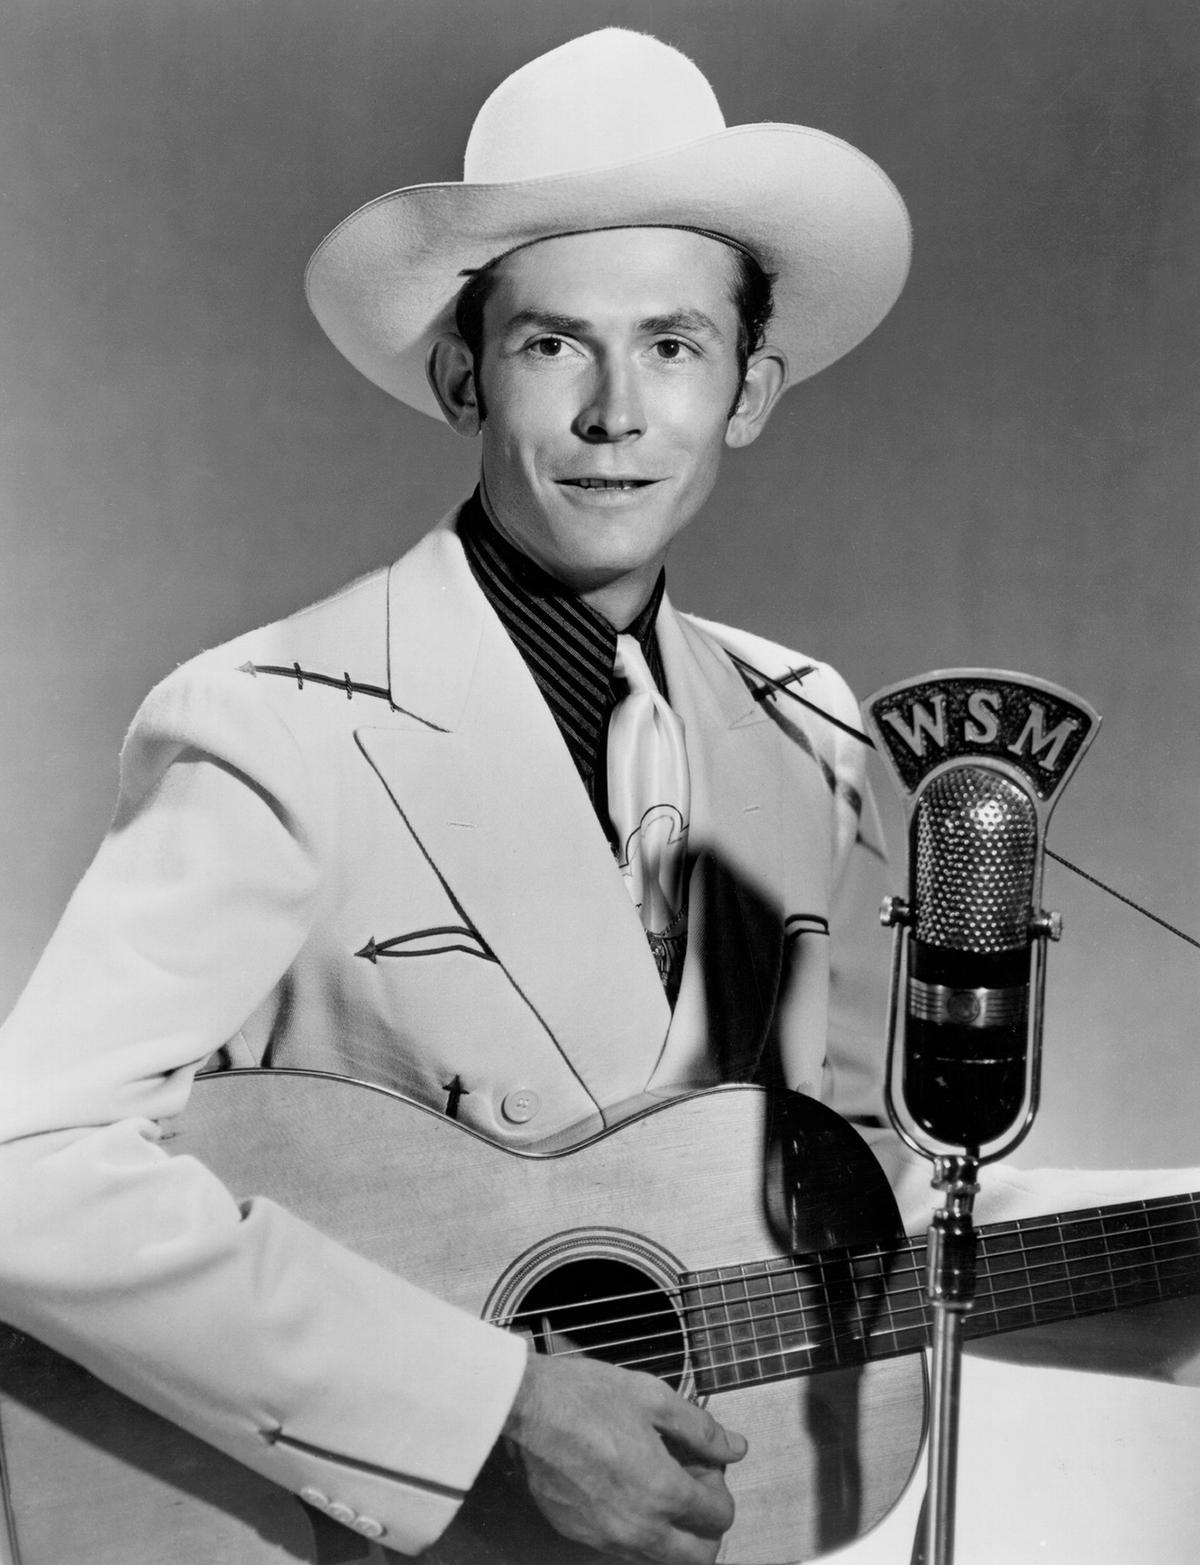 Hank Williams publicity photo for WSM Radio in Nashville, 1951. (Public Domain)